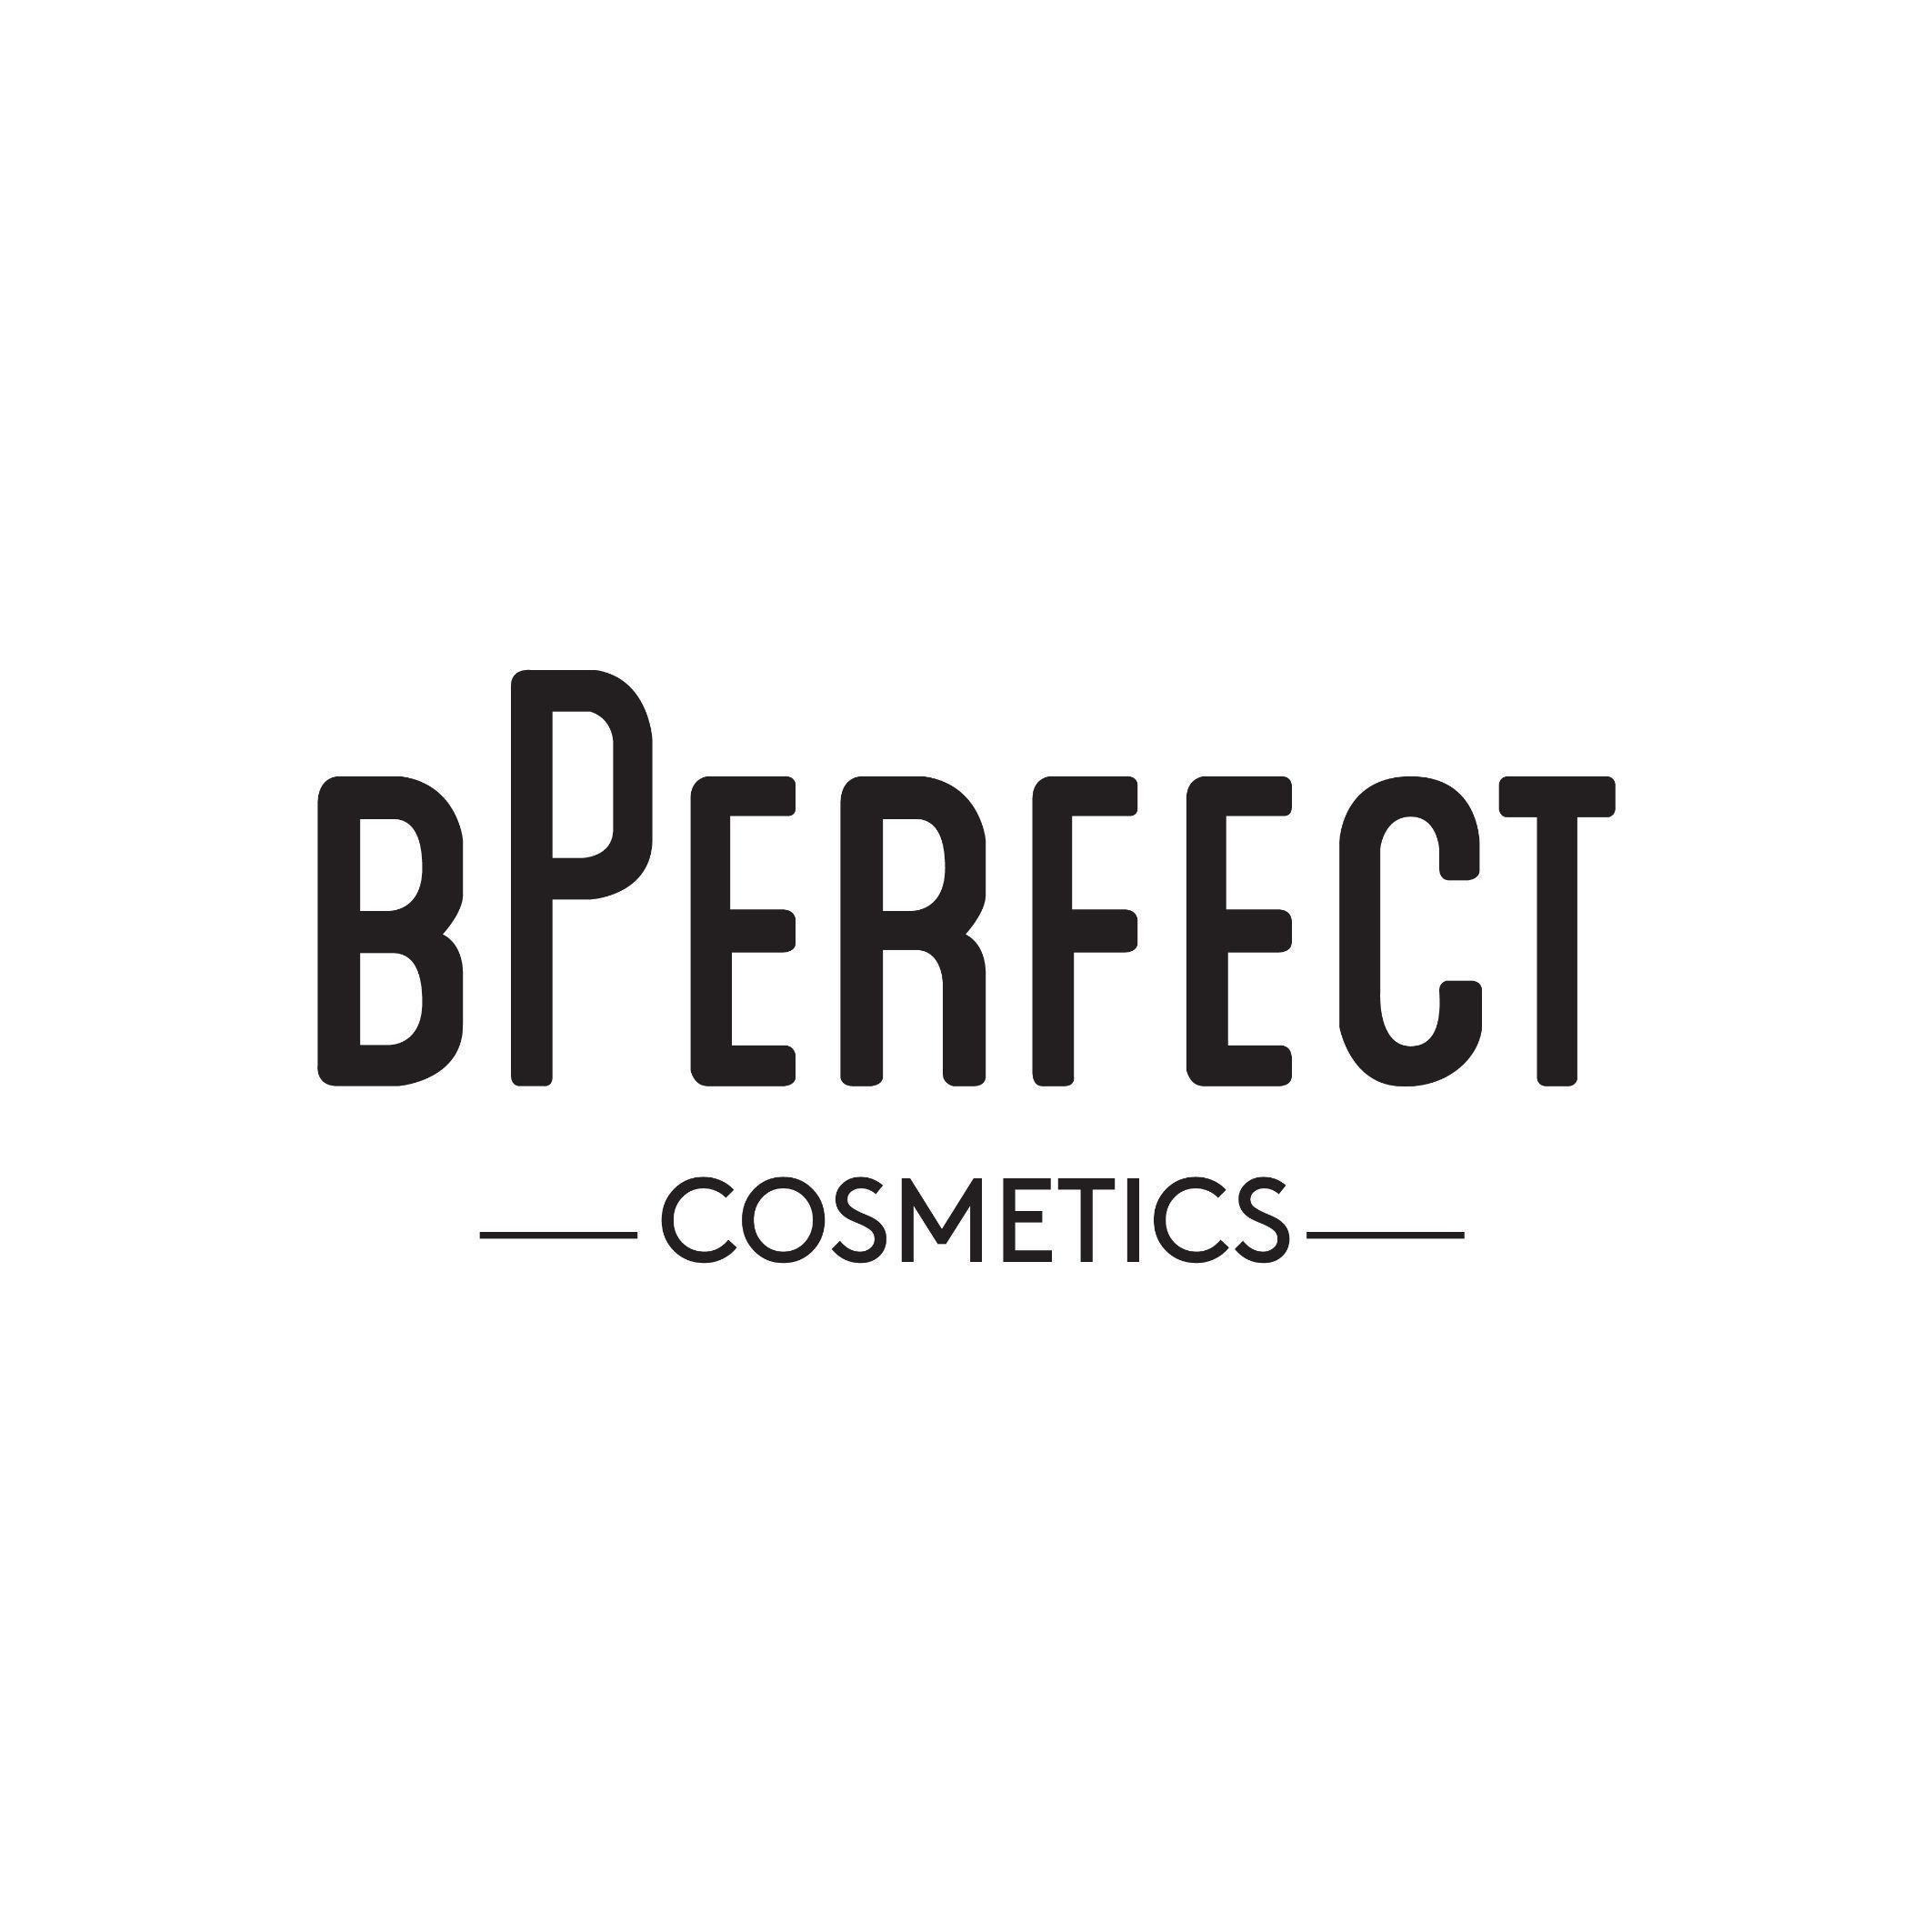 BPerfect Cosmetics Tallaght, Belgard Square East, Dublin